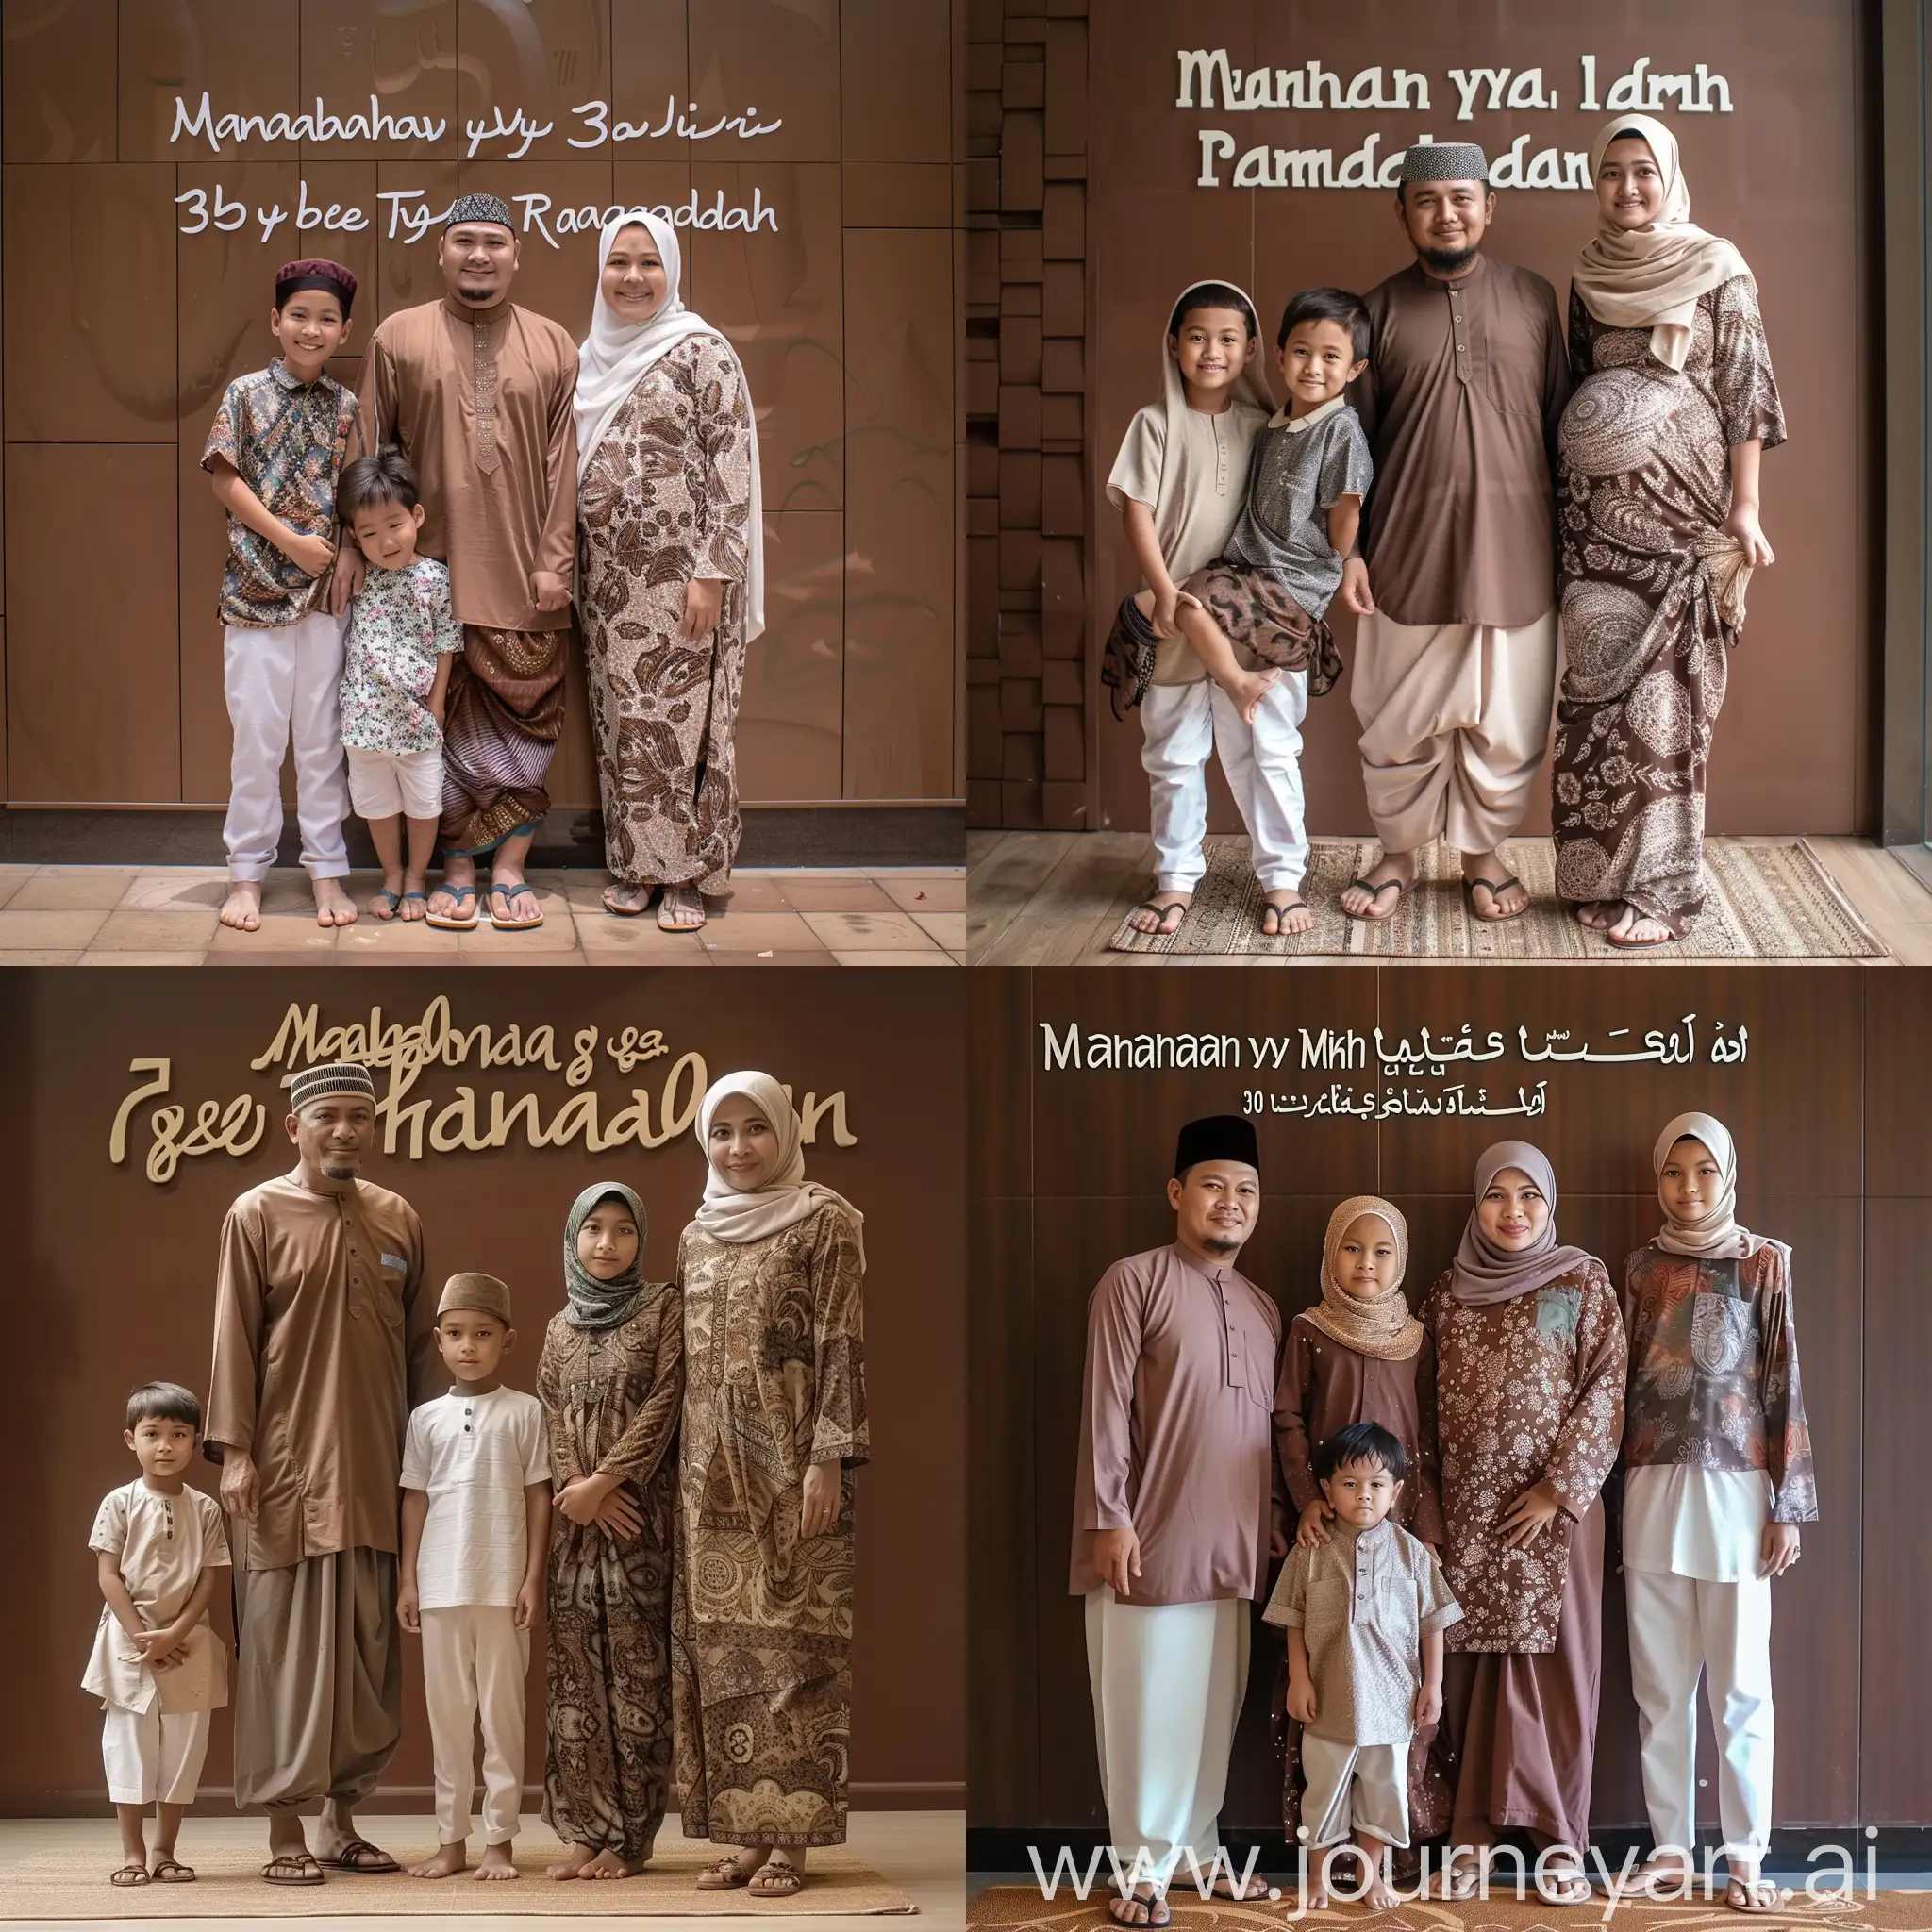 Indonesian-Muslim-Family-Celebrating-Ramadan-with-3D-Wall-Art